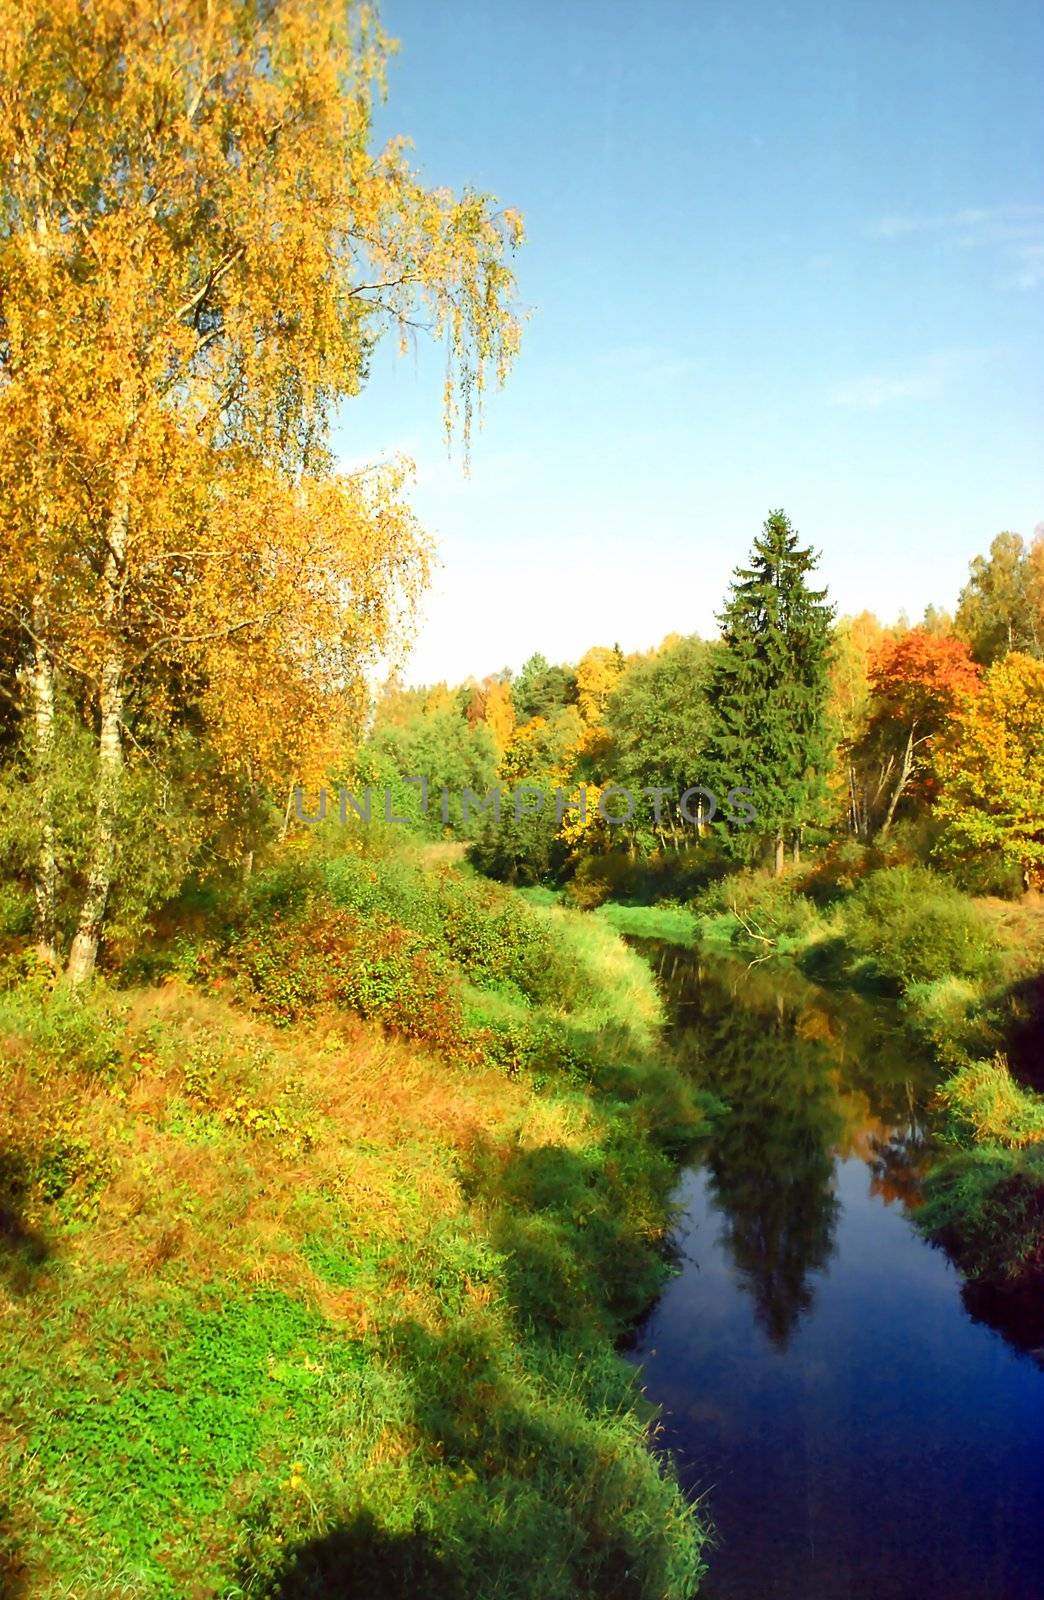 Splendor of autumn nature at riverside